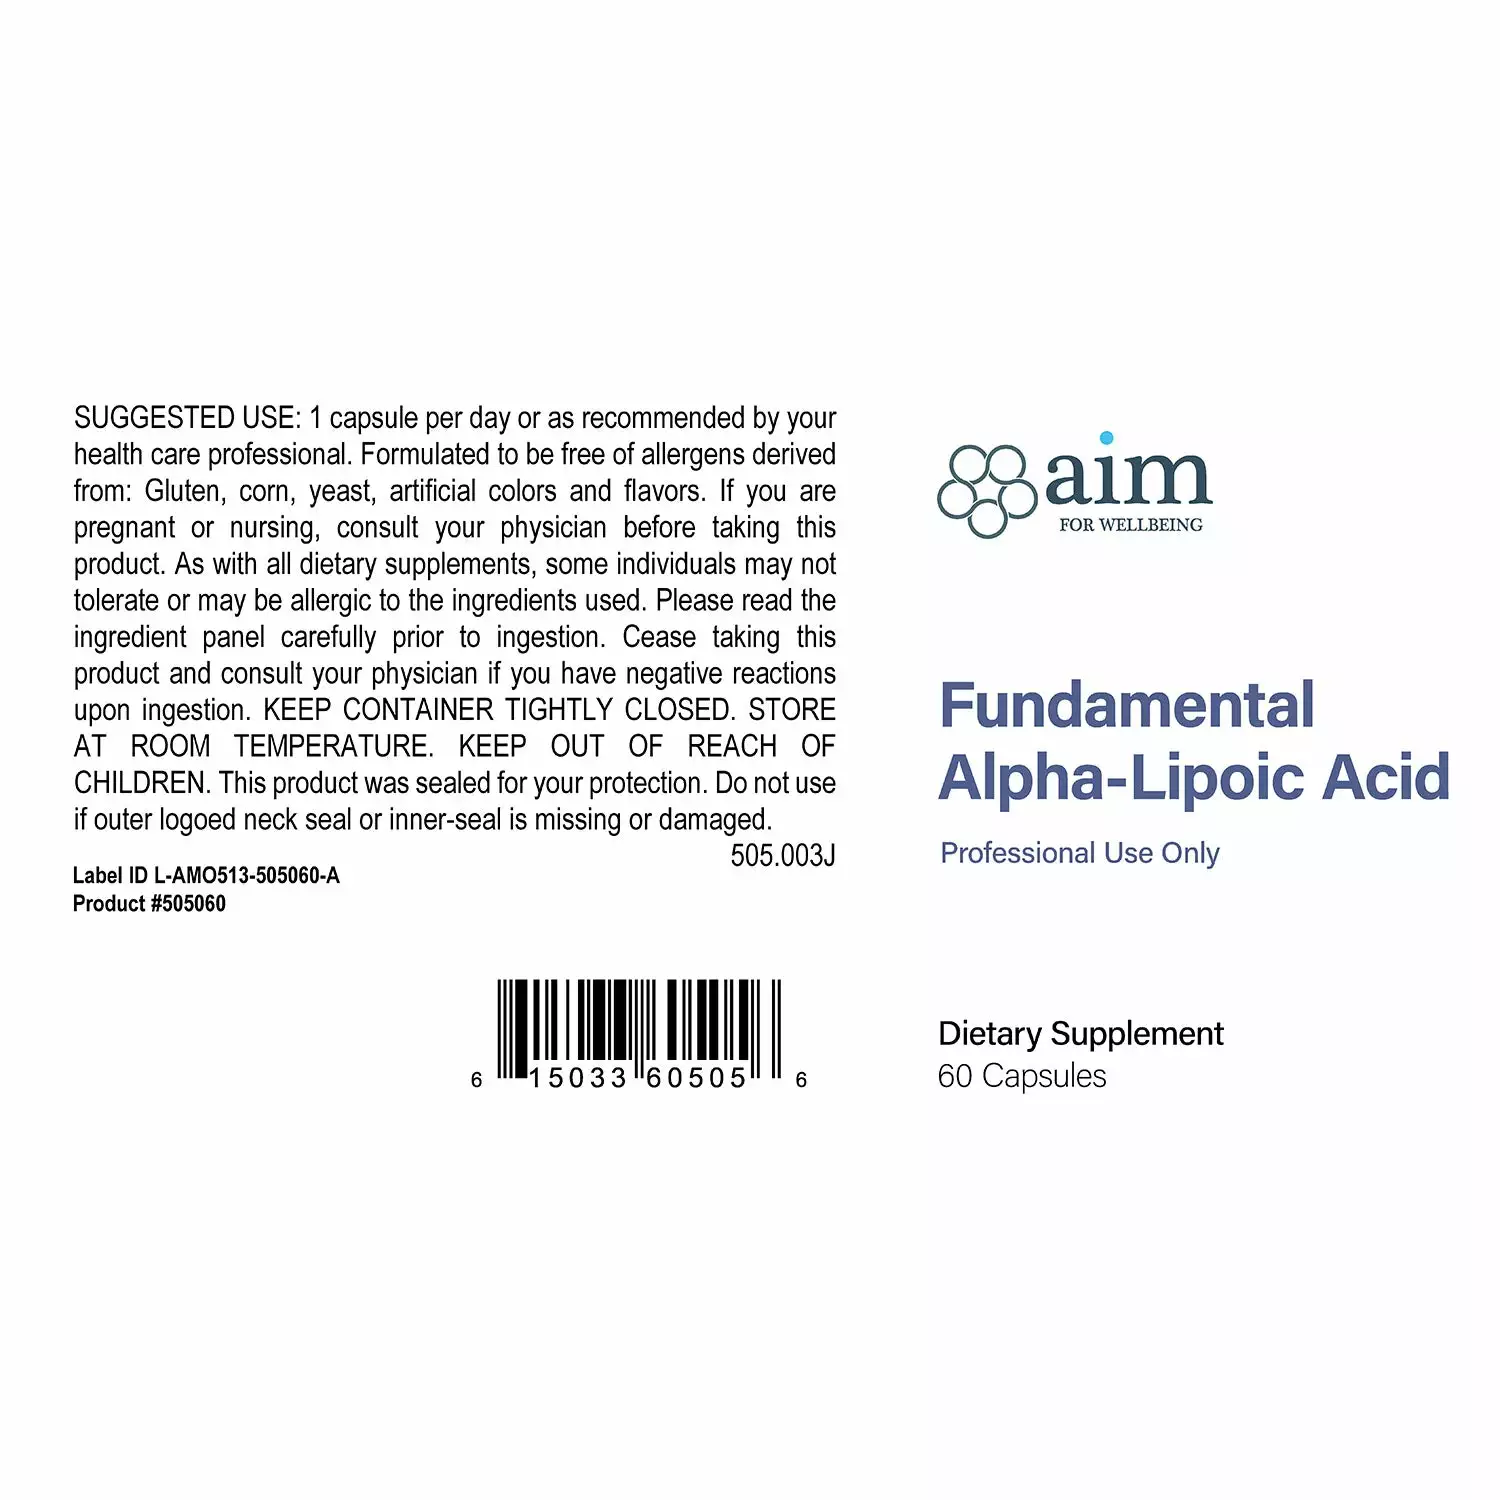 Fundamental Alpha-Lipoic Acid